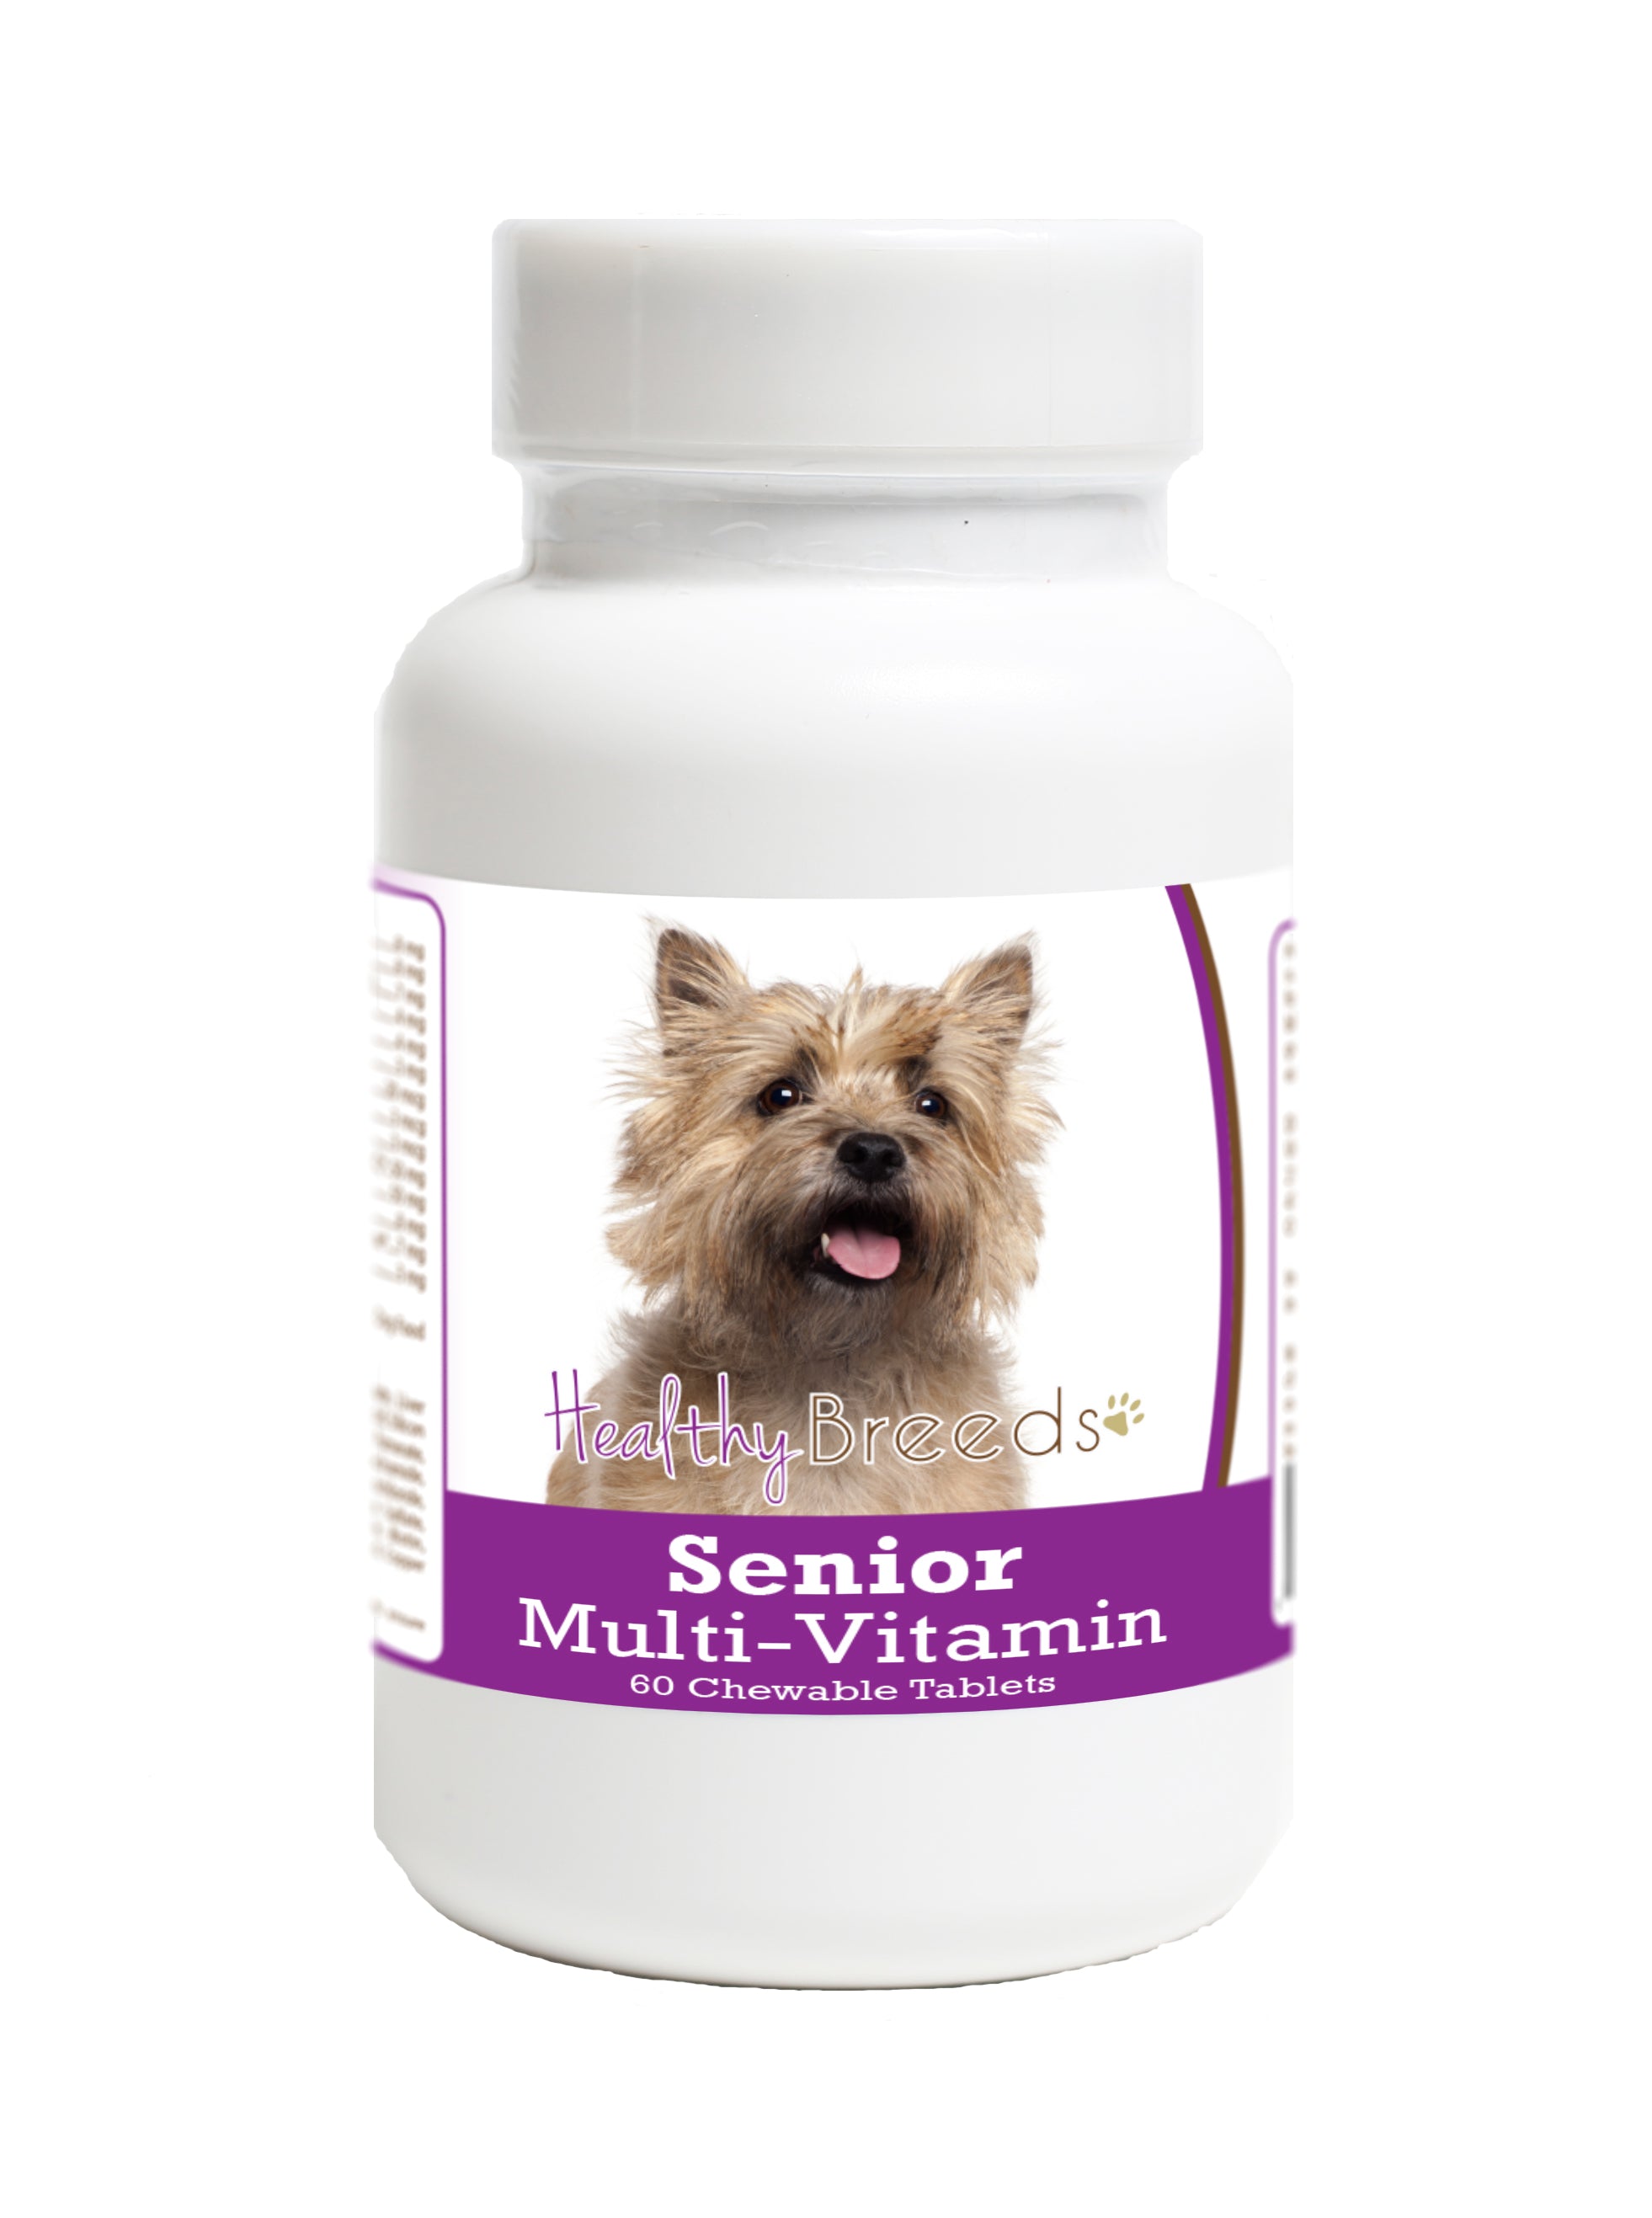 Cairn Terrier Senior Dog Multivitamin Tablets 60 Count